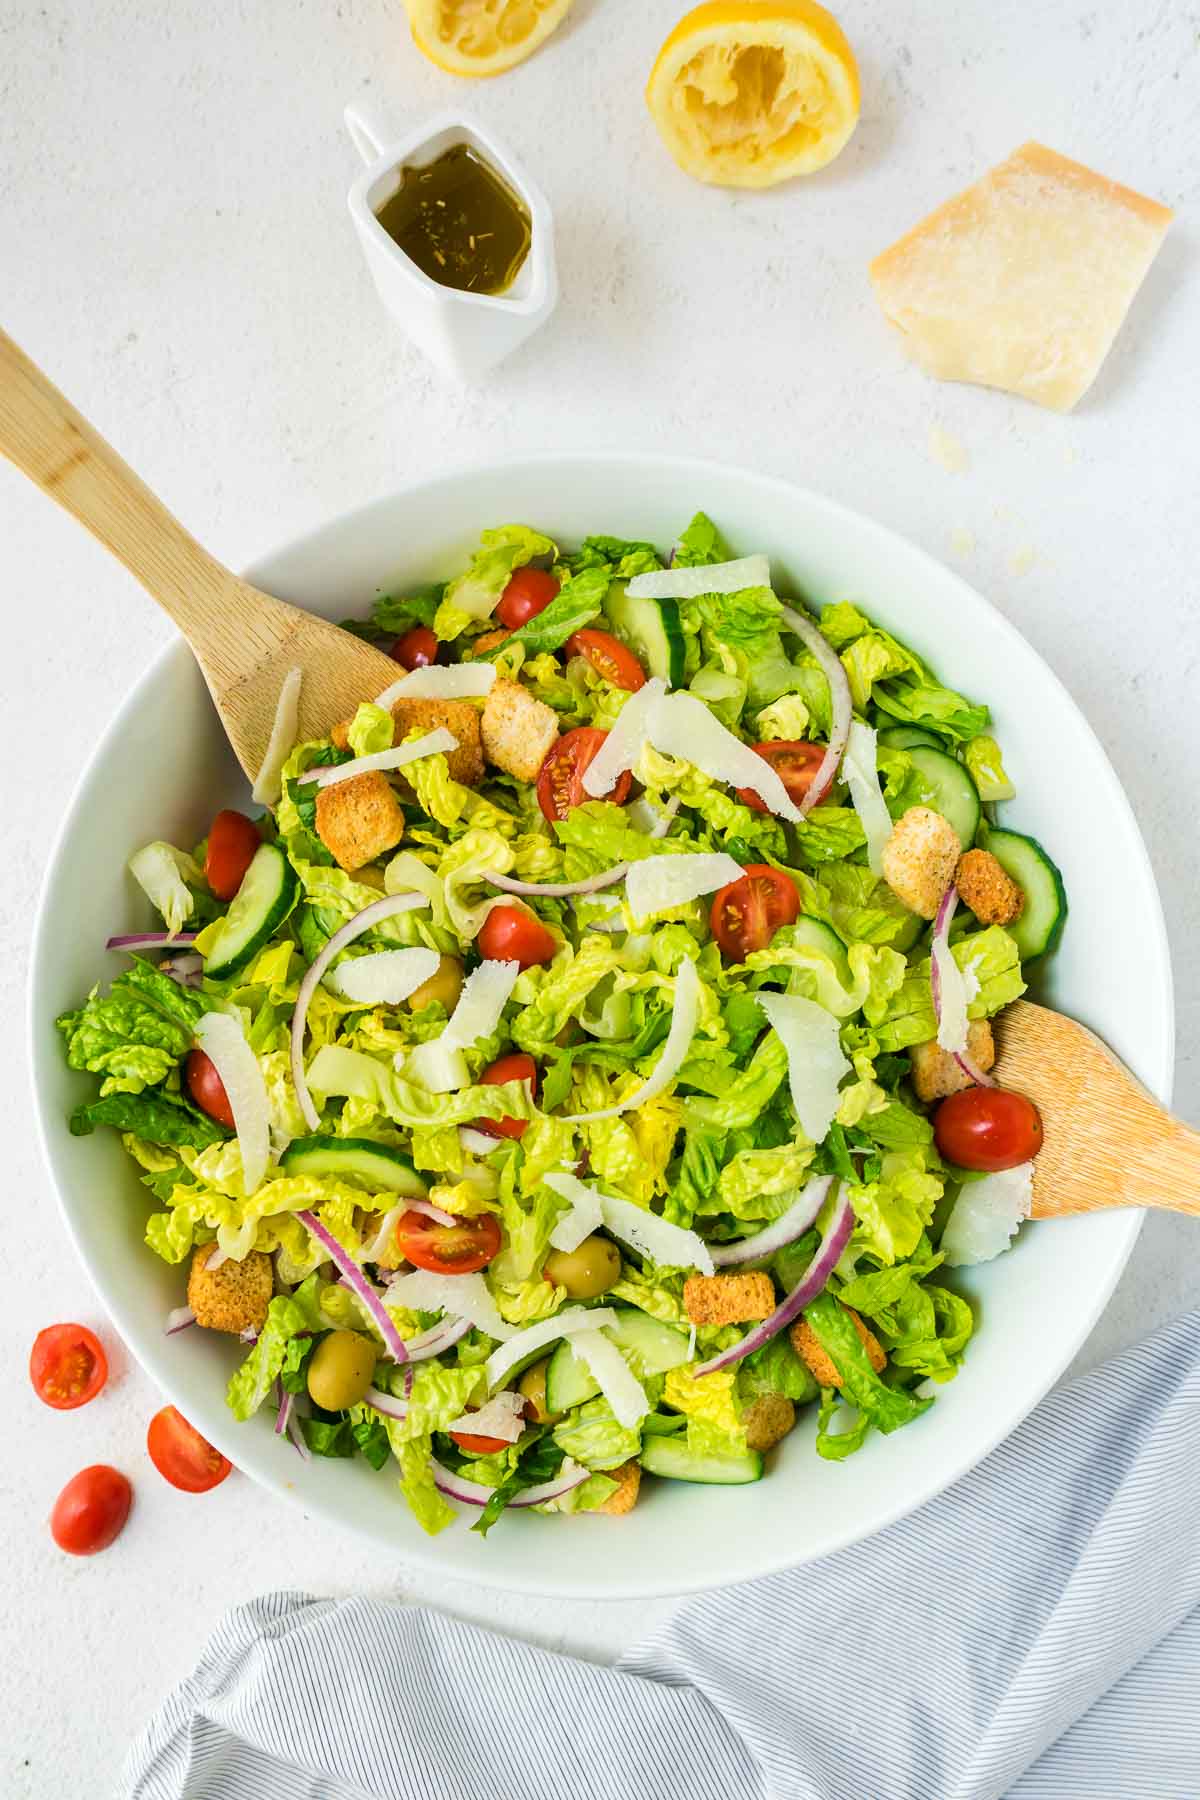 https://getonmyplate.com/wp-content/uploads/2022/01/salad-for-a-crowd-10.jpg